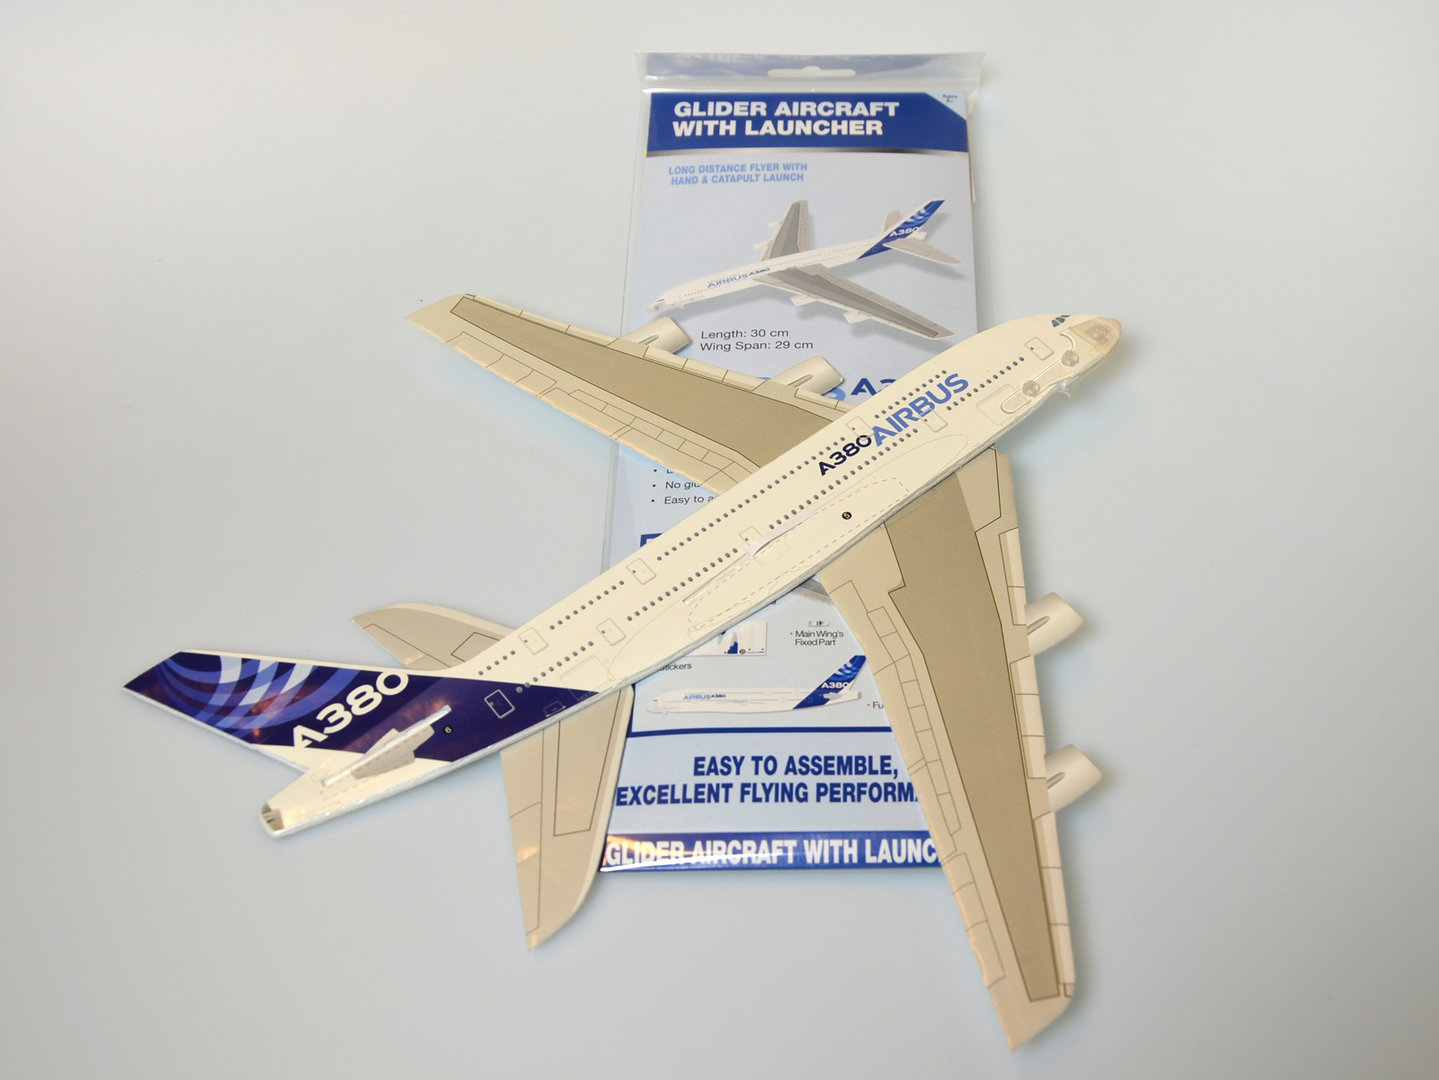 Airbus A380 glider